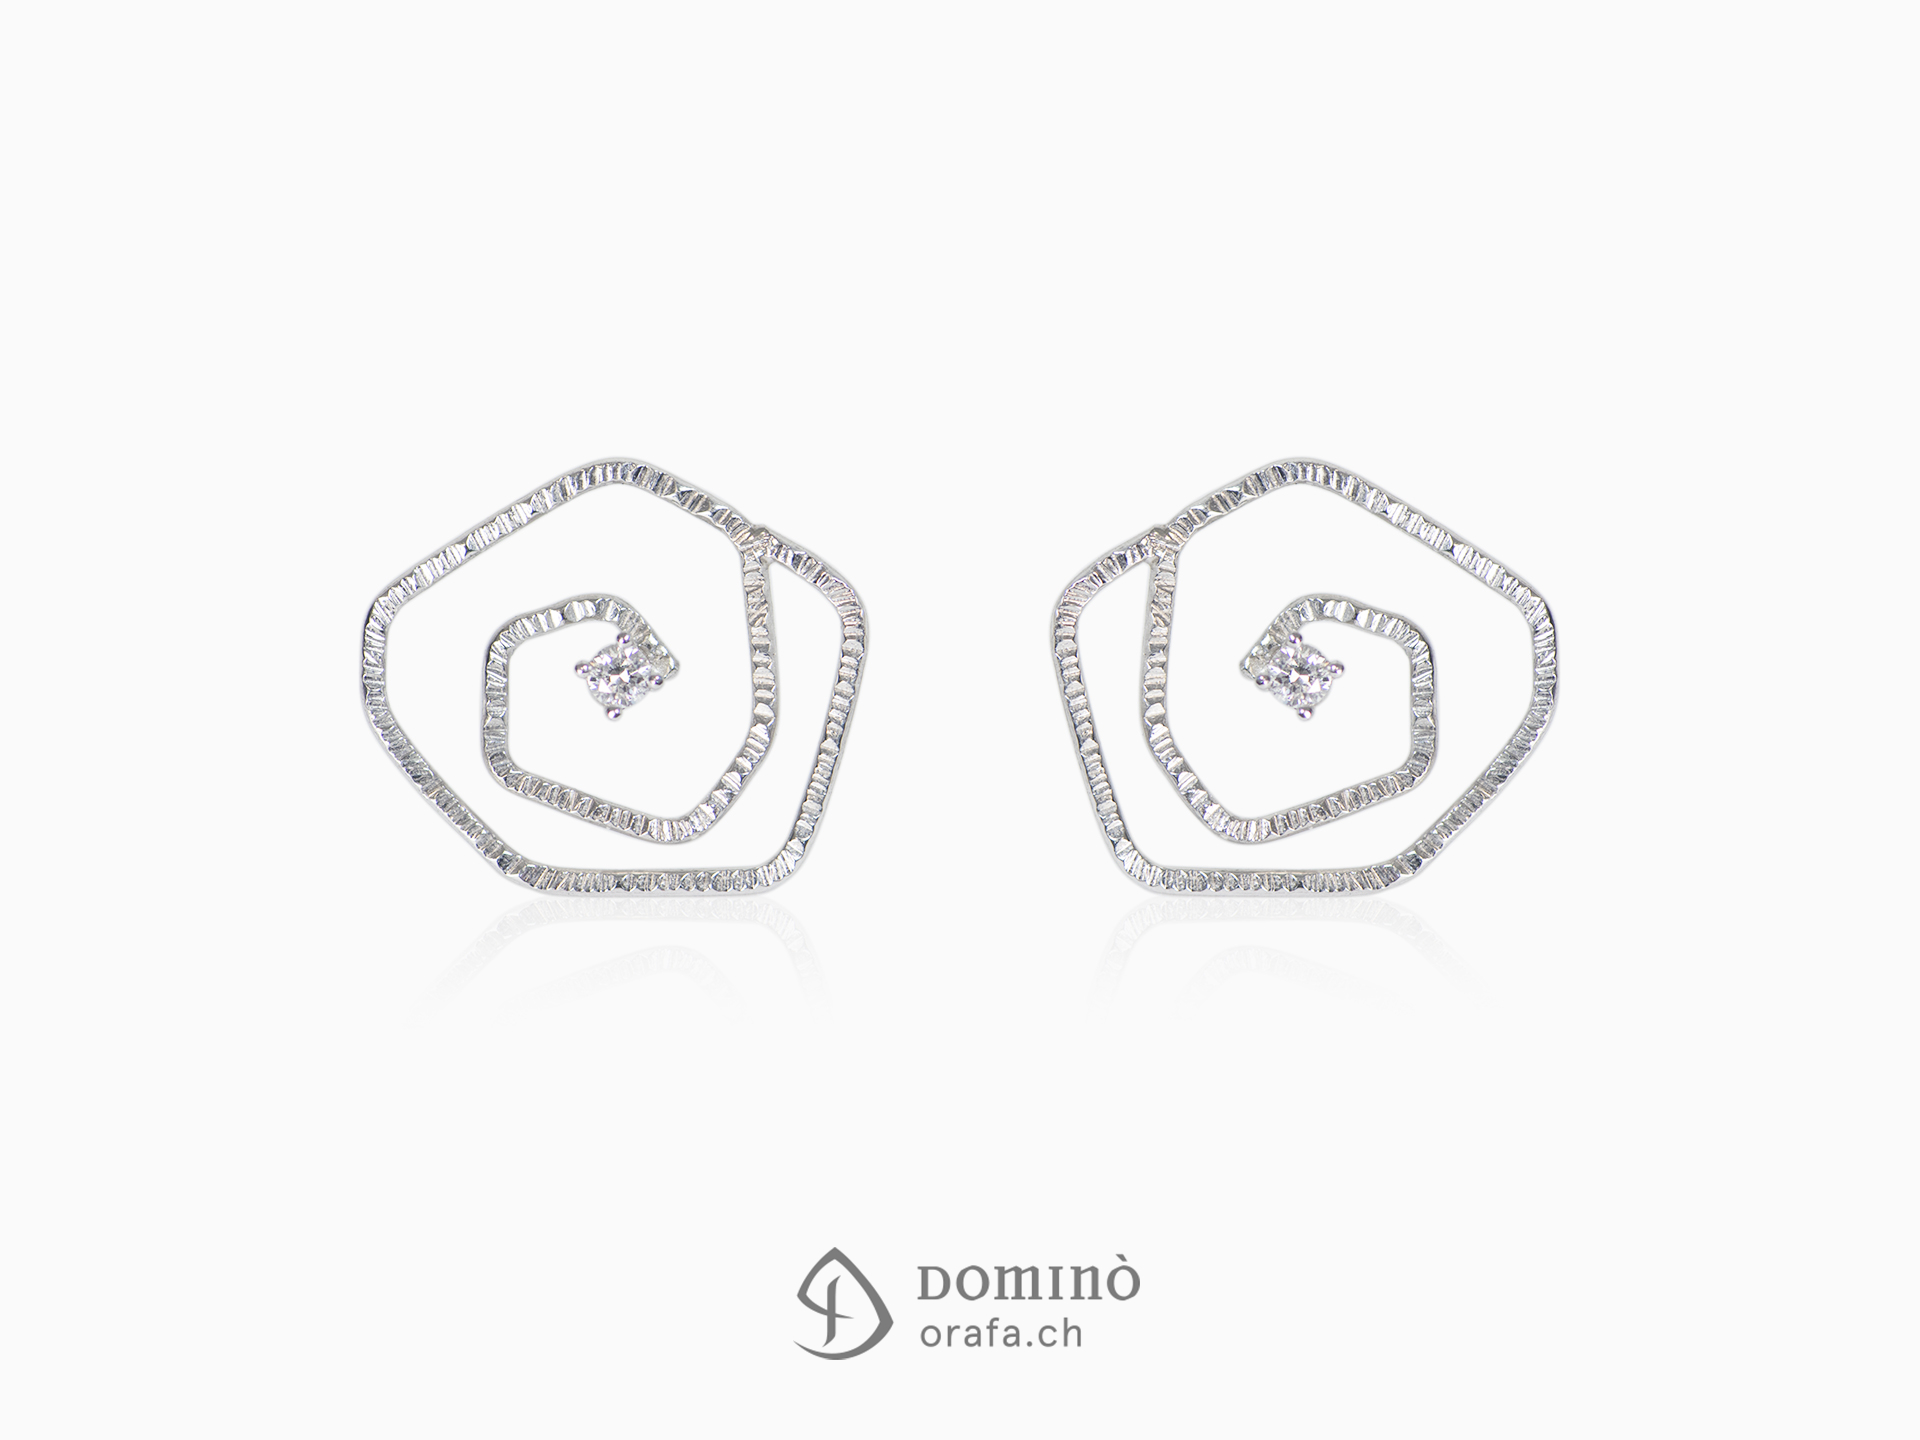 Rose earrings with diamonds